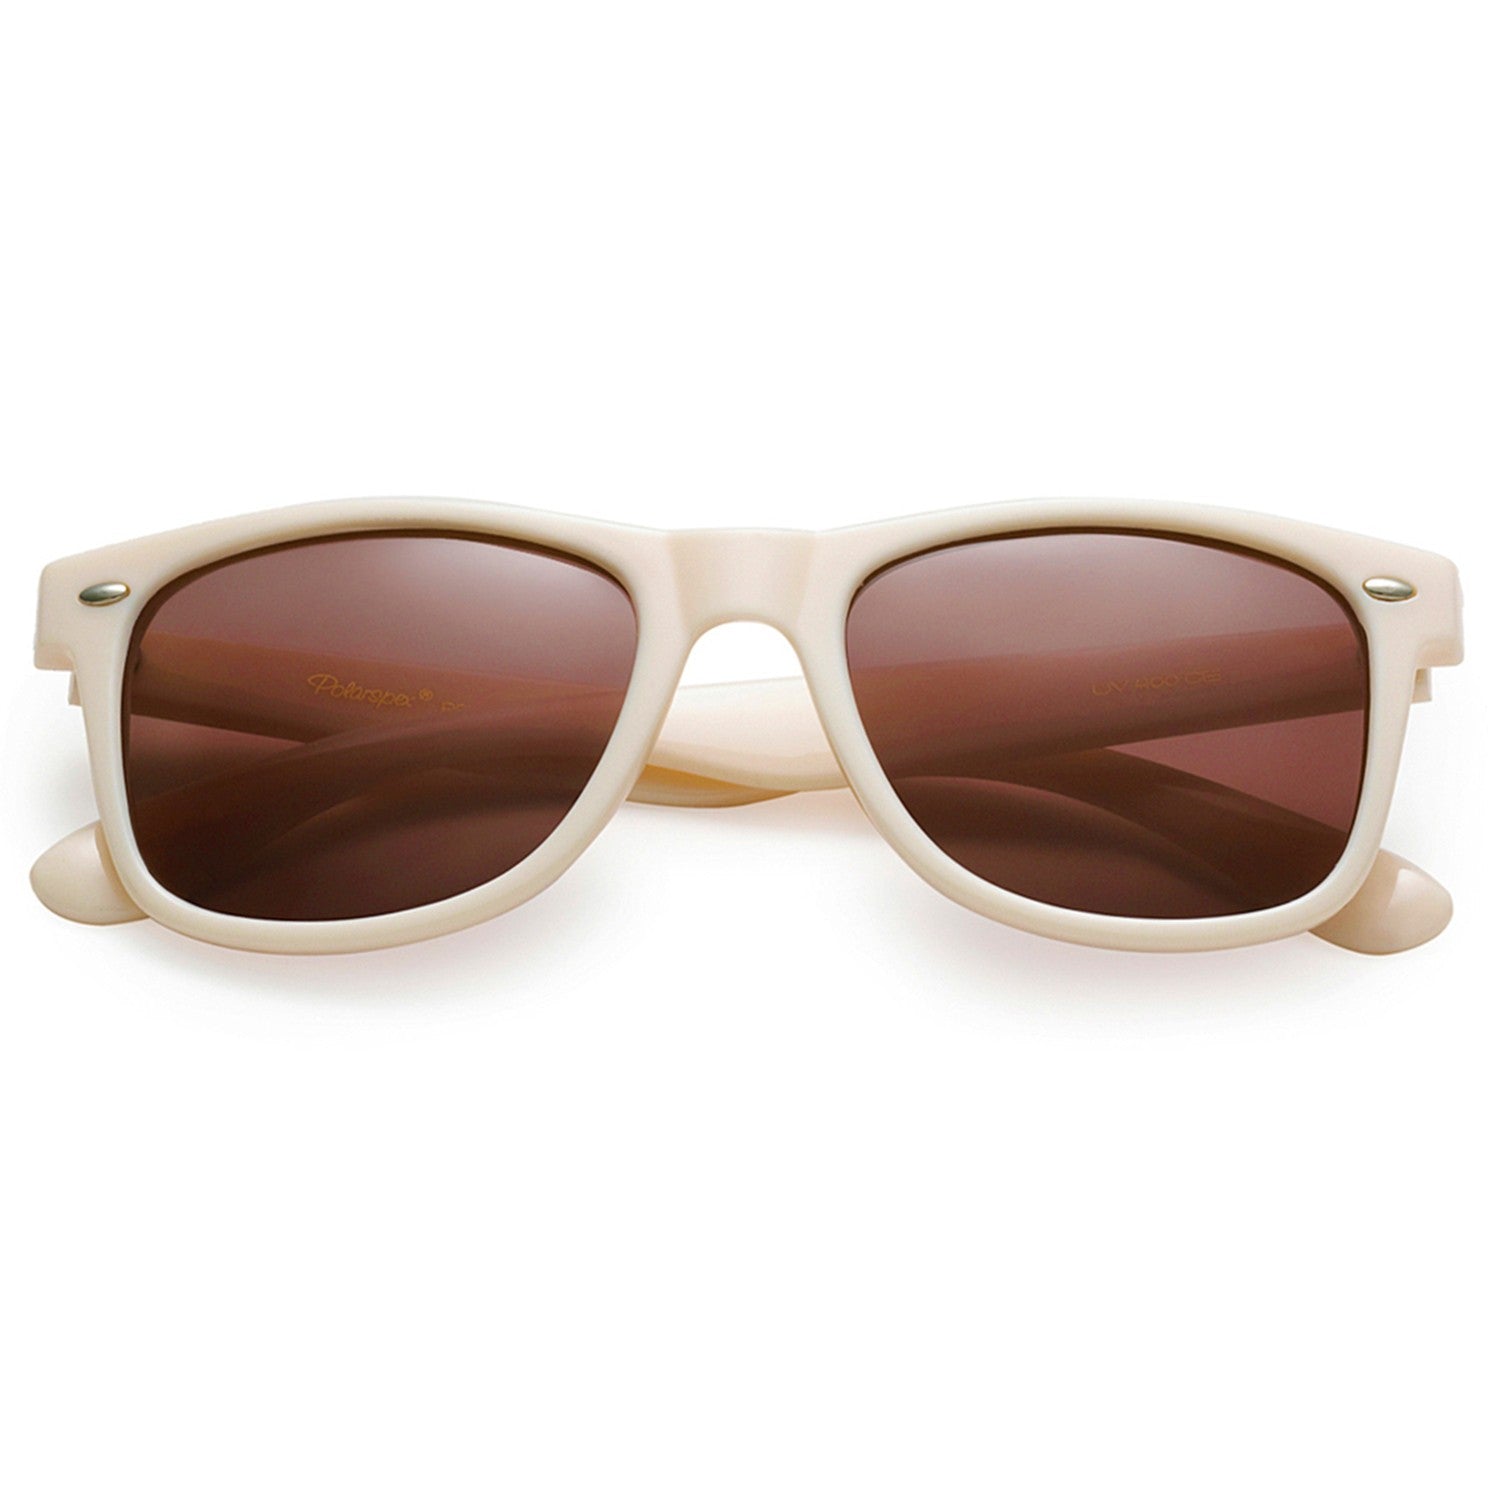 Polarspex Polarized 80's Retro Style Unisex Sunglasses with Ivory Beige Frames and Ash Smoke Lenses